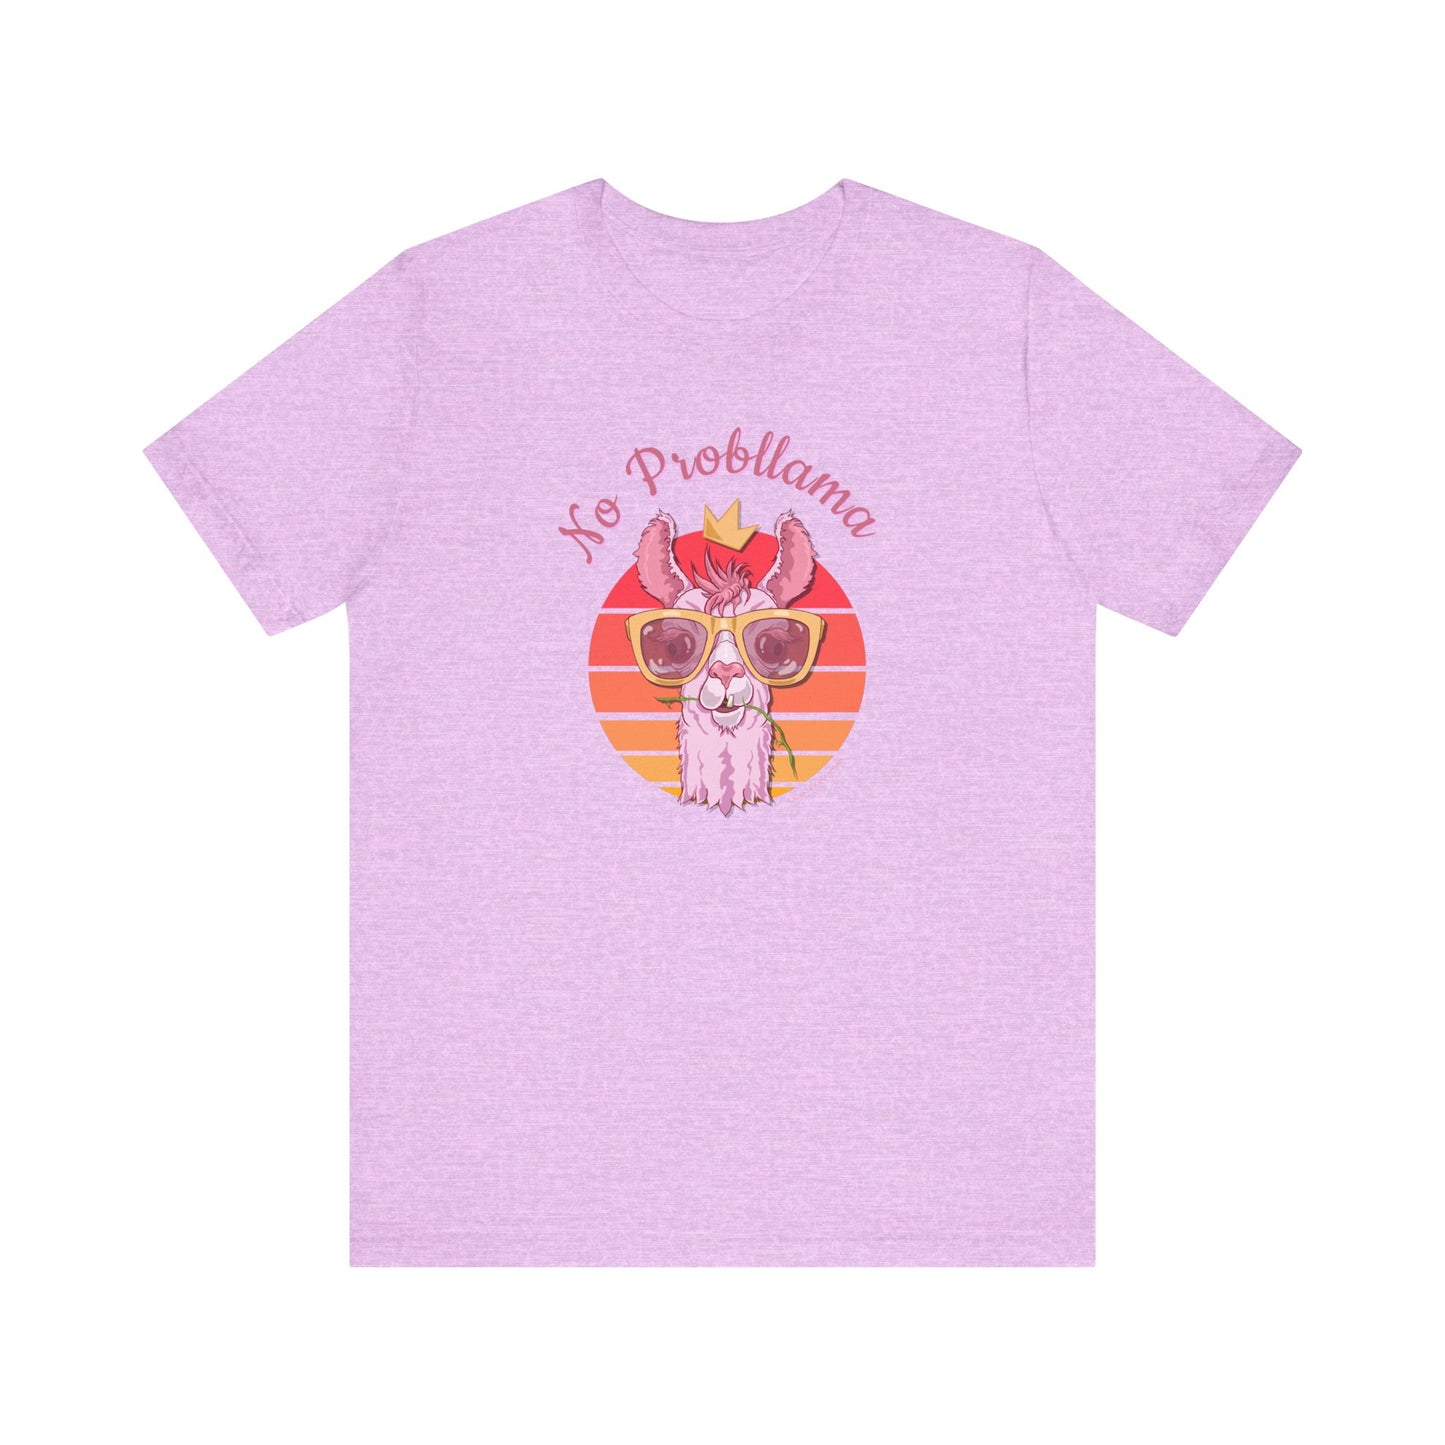 No Probllama Unisex Jersey Short Sleeve Tee | No Probllama No Drama Llama Shirt | Funny Llama T-Shirt for animal lover